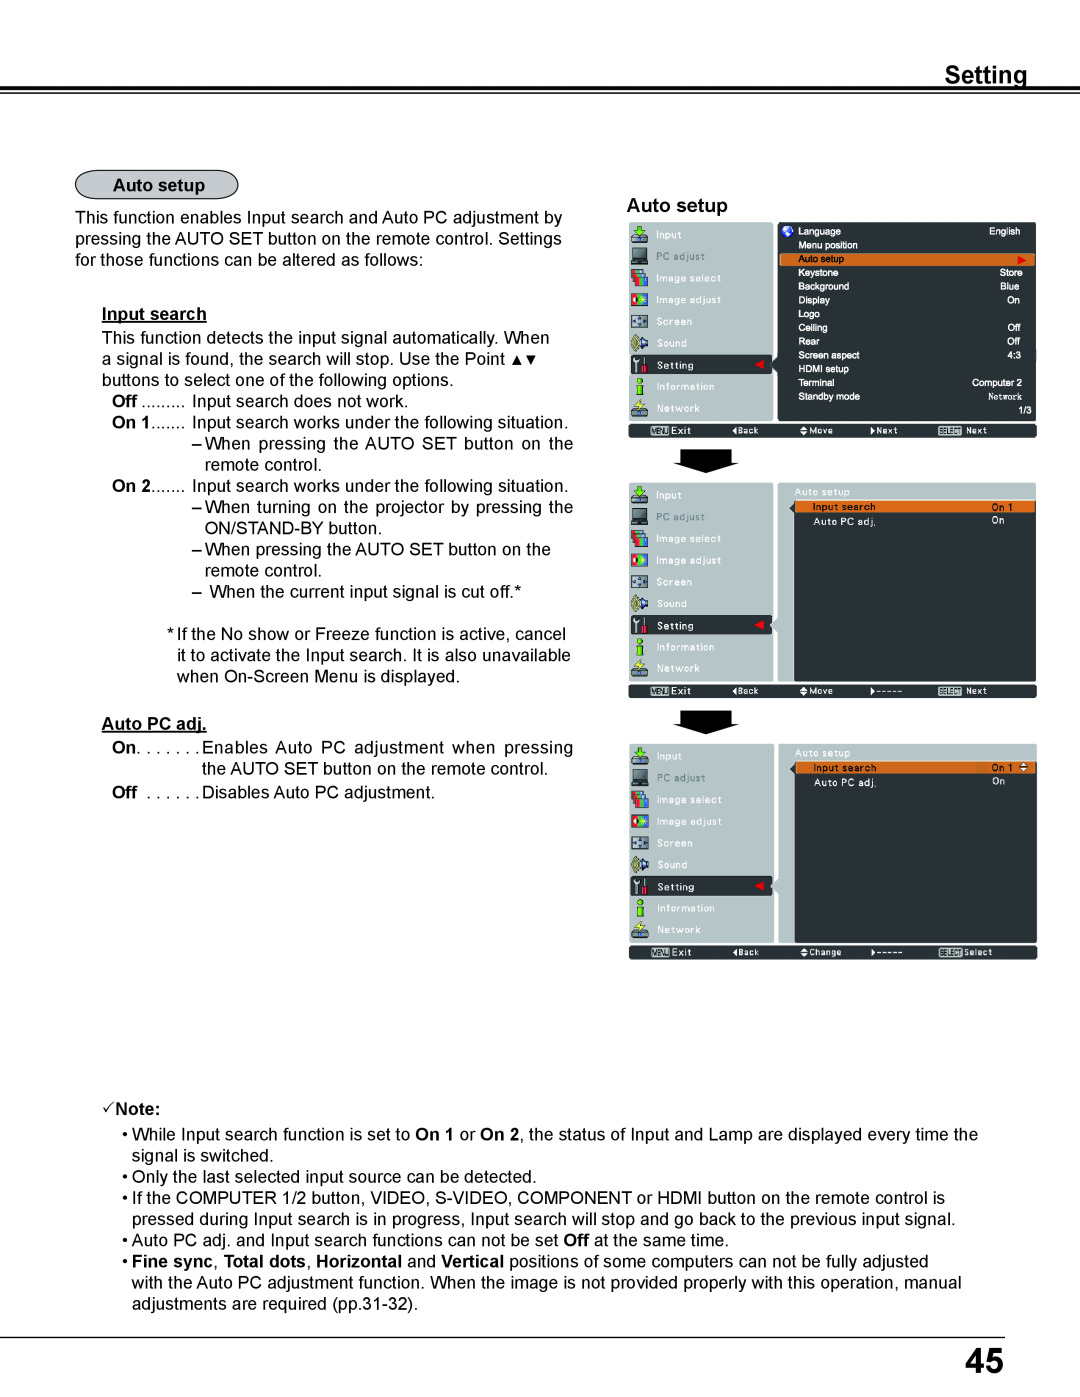 Sanyo PLC-WL2503A owner manual Setting, Auto setup, Input search, Auto PC adj, Note 